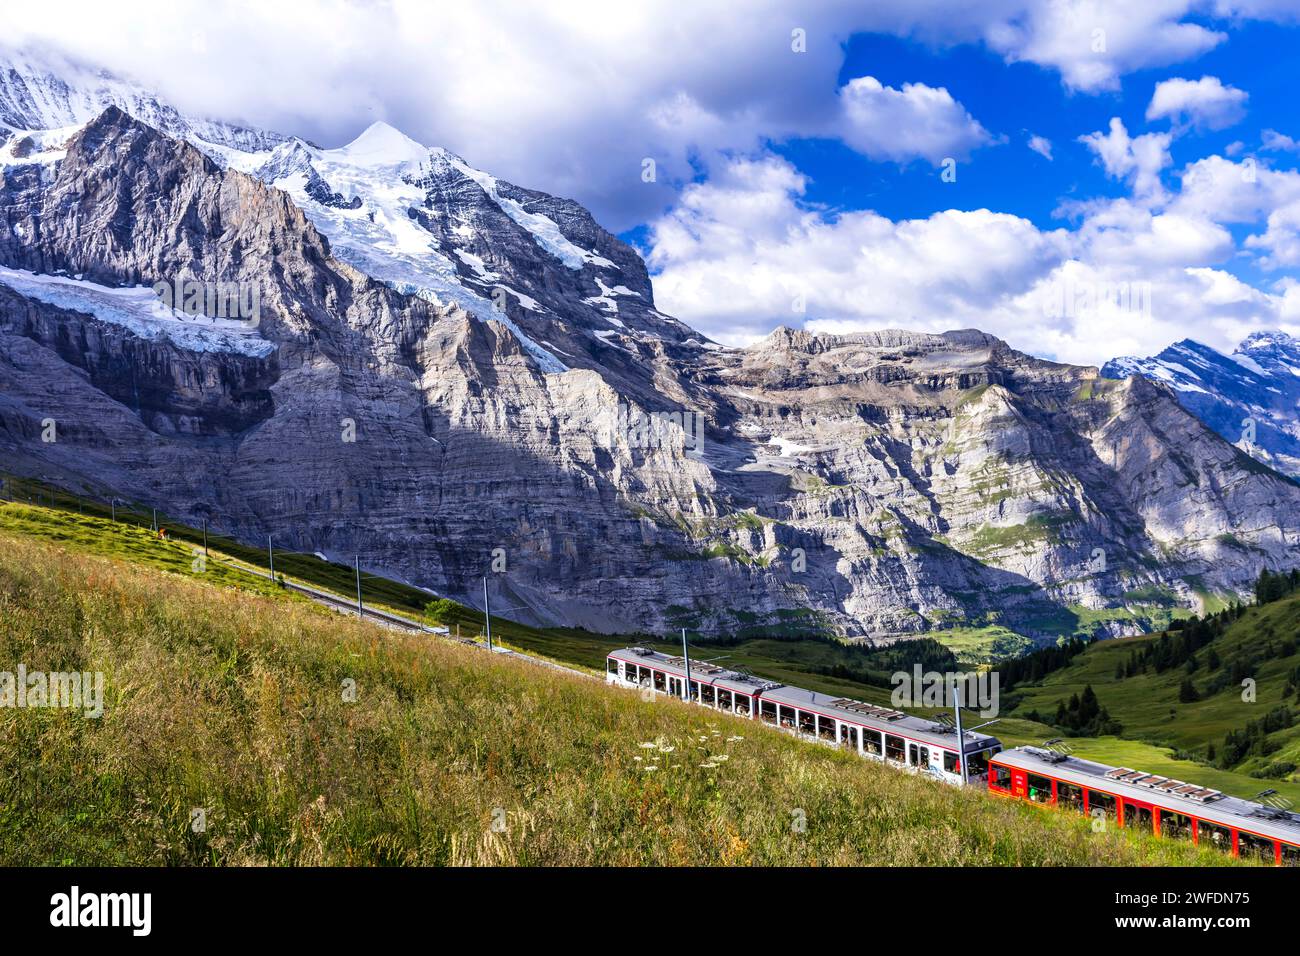 Idyllic swiss landscape scenery. Green pastures, snowy peaks of Alps mountains and railway road with passing train. Kleine Scheidegg station, Switzerl Stock Photo